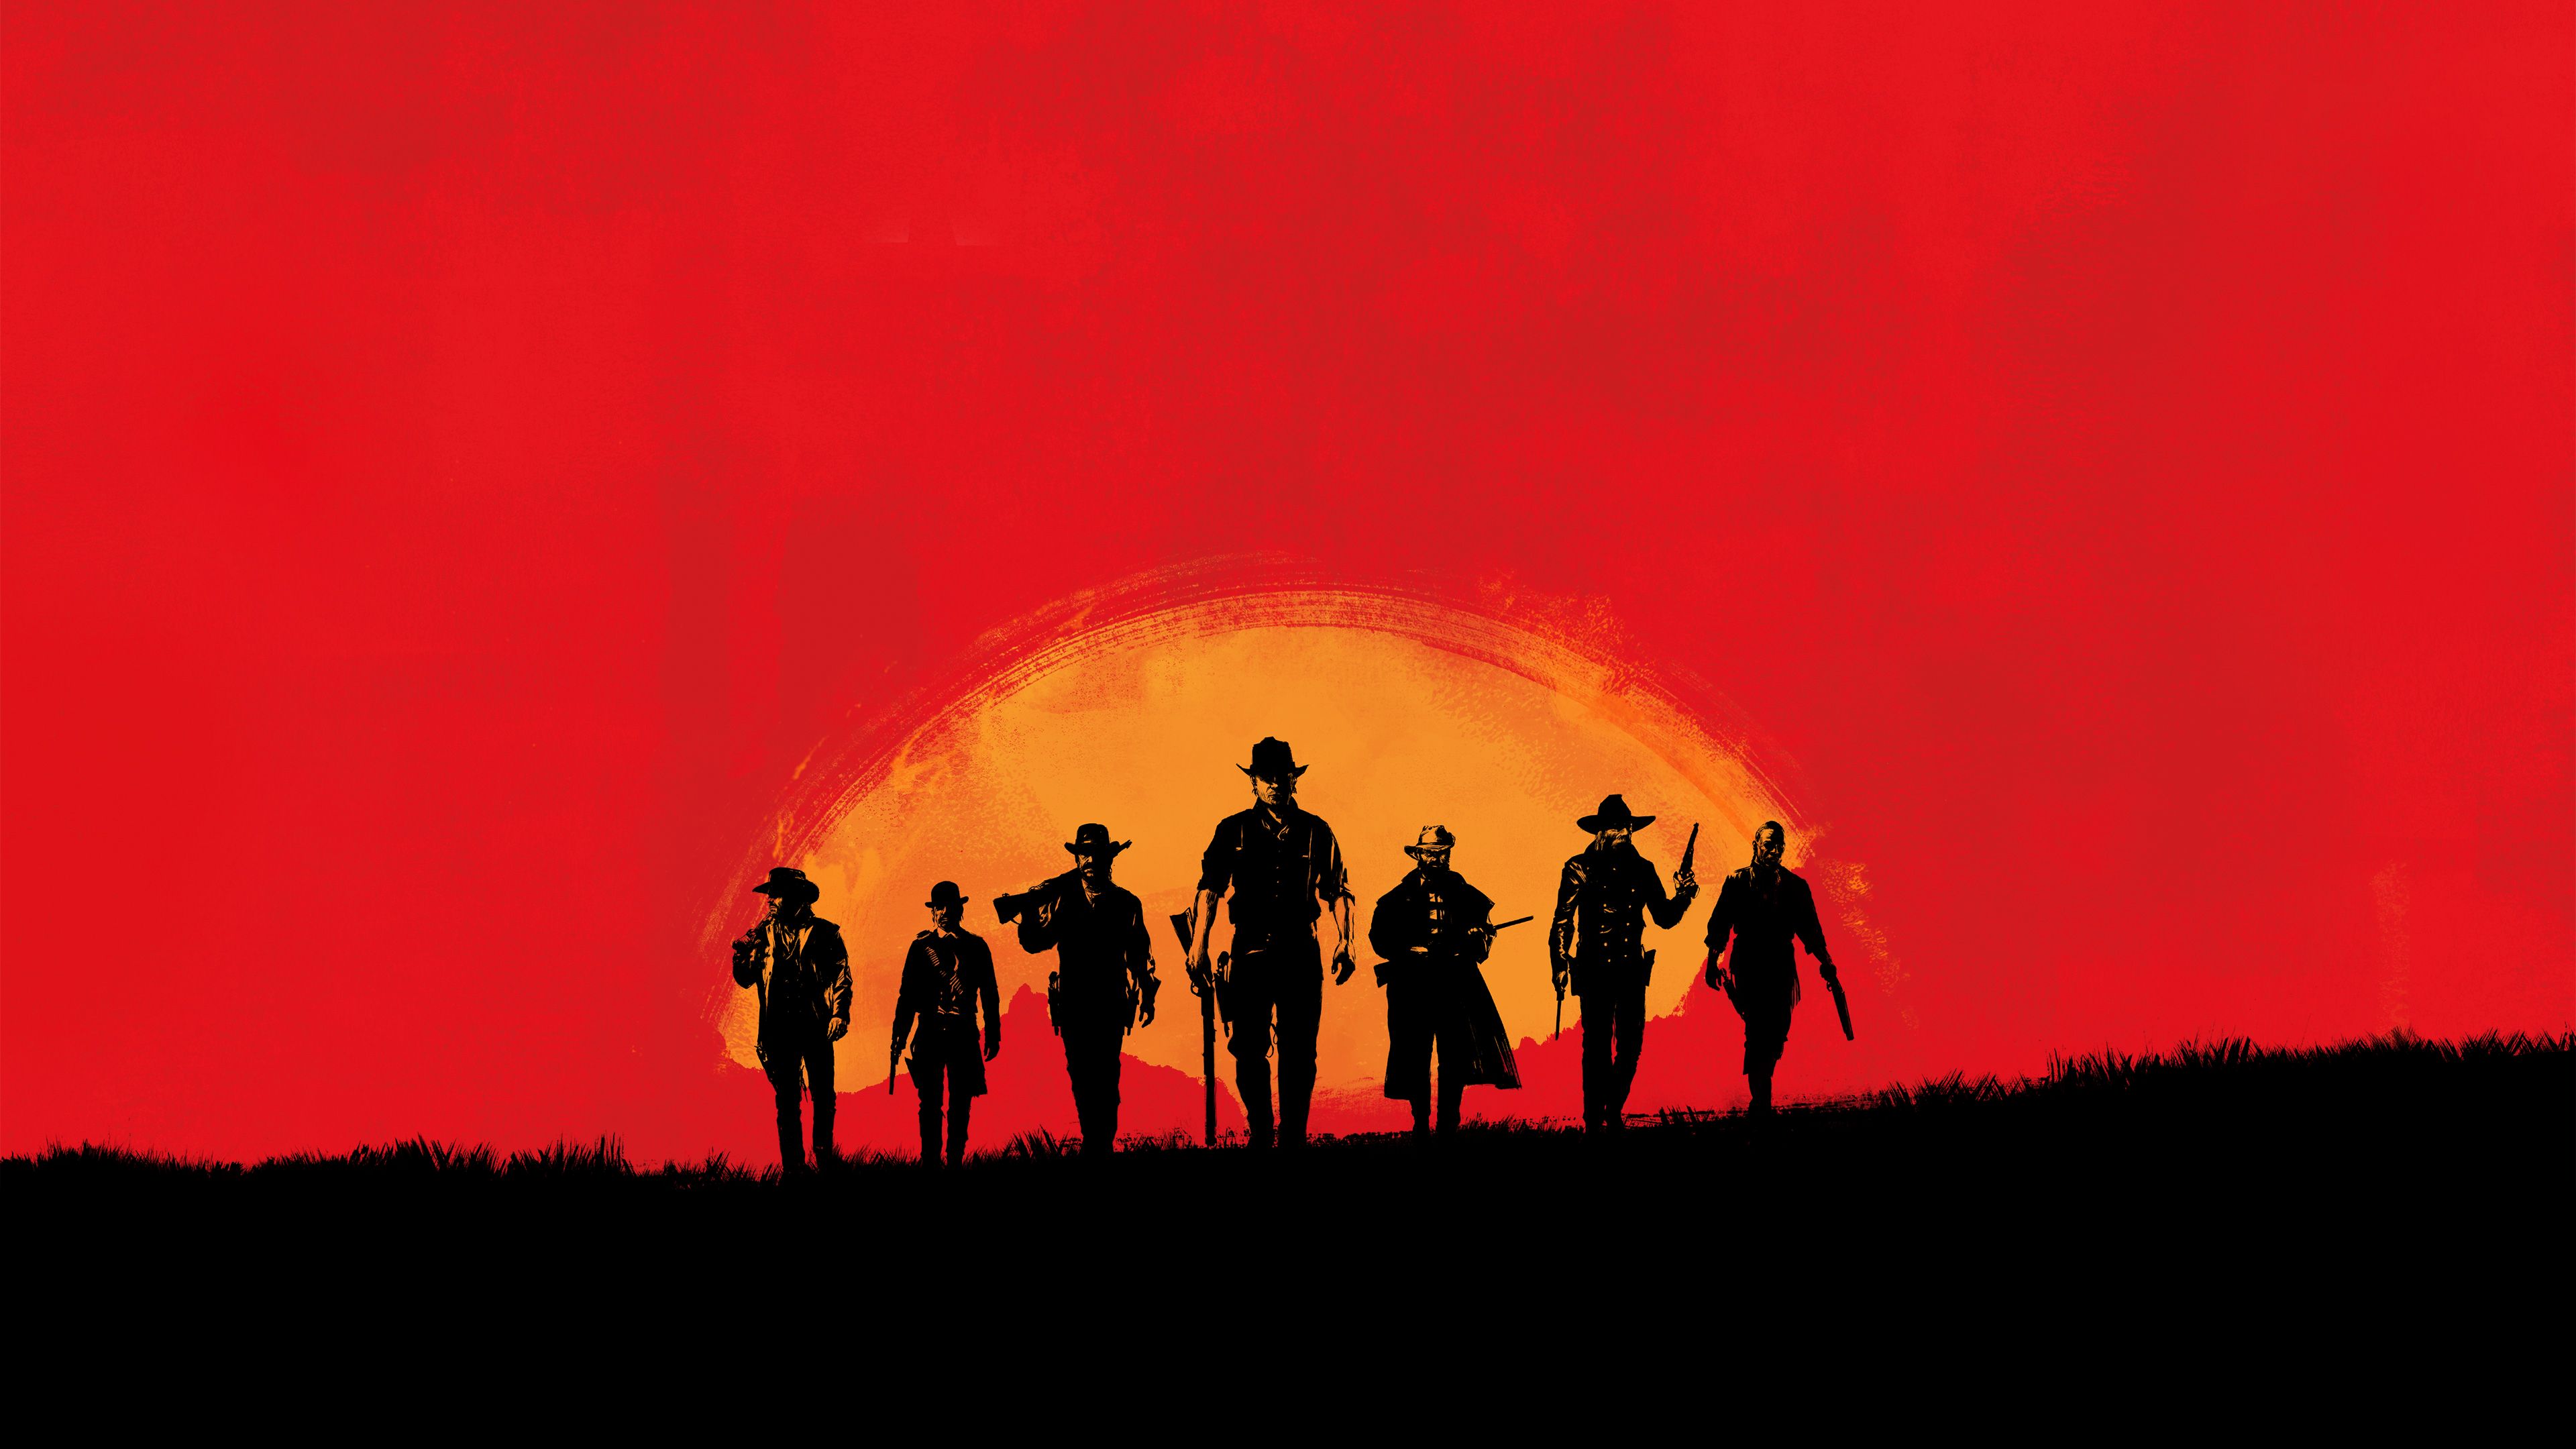 Ultra HD Red Dead Redemption 2 wallpaper